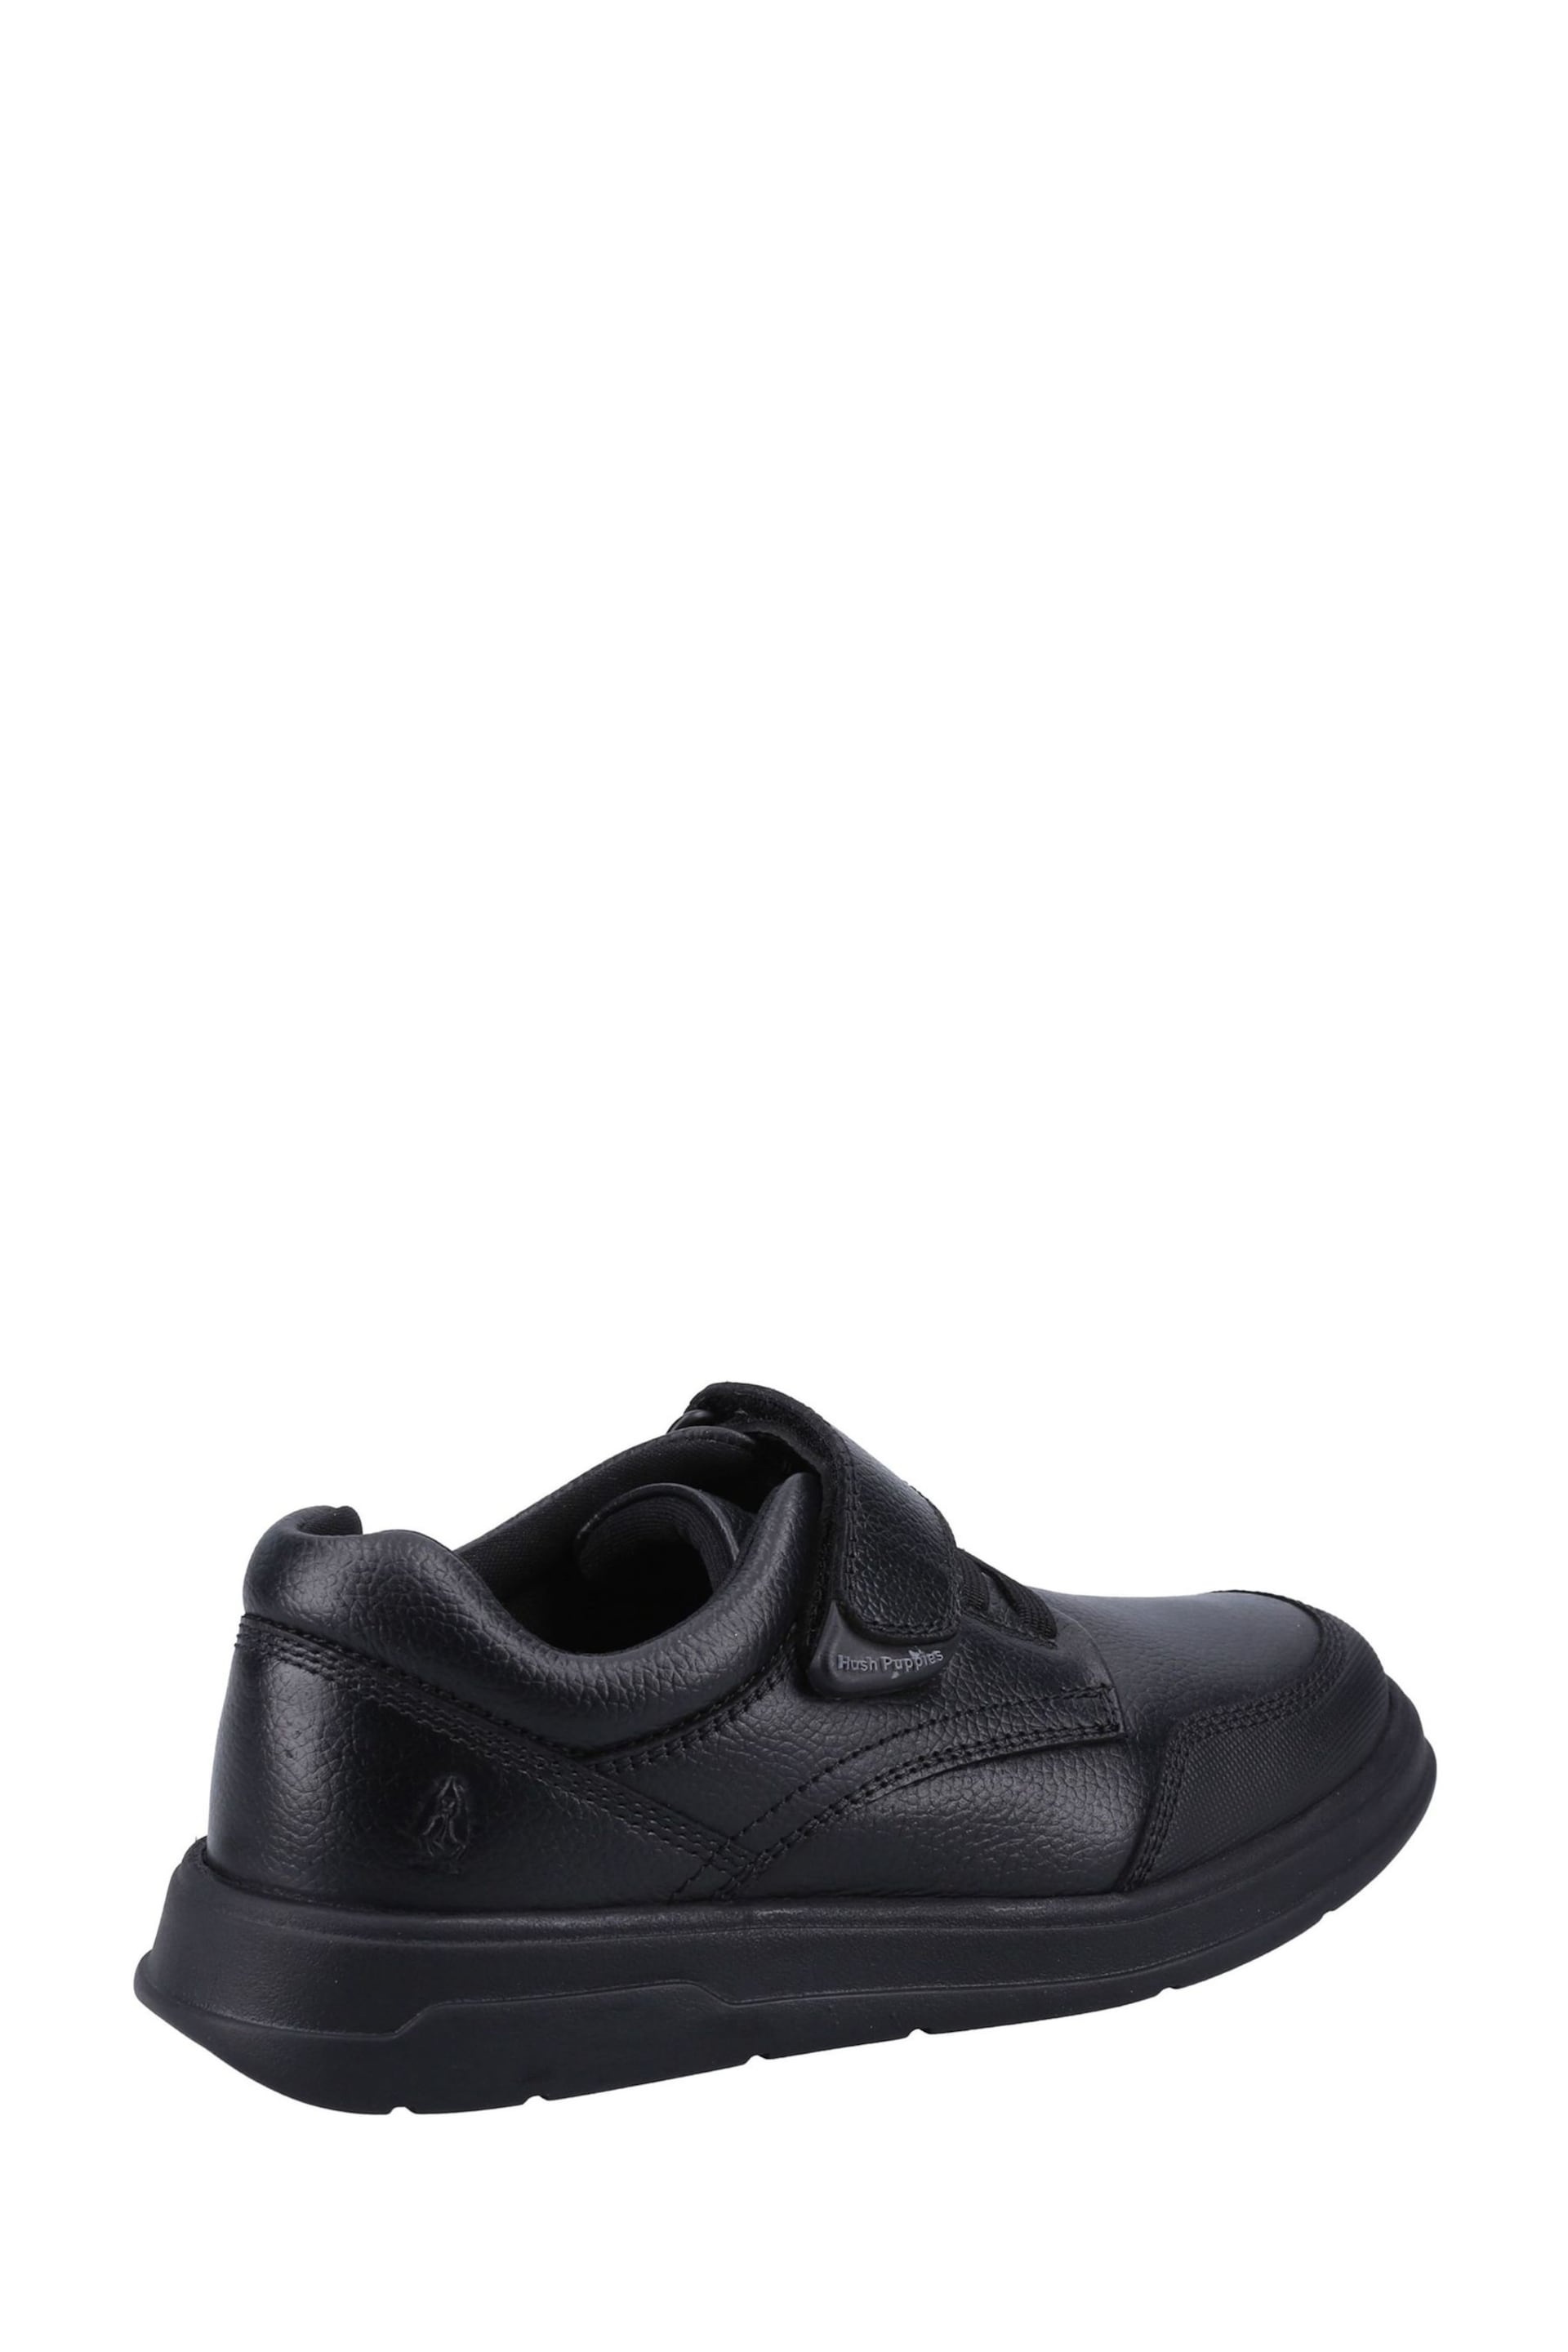 Hush Puppies Rowan Junior Black Shoes - Image 3 of 4